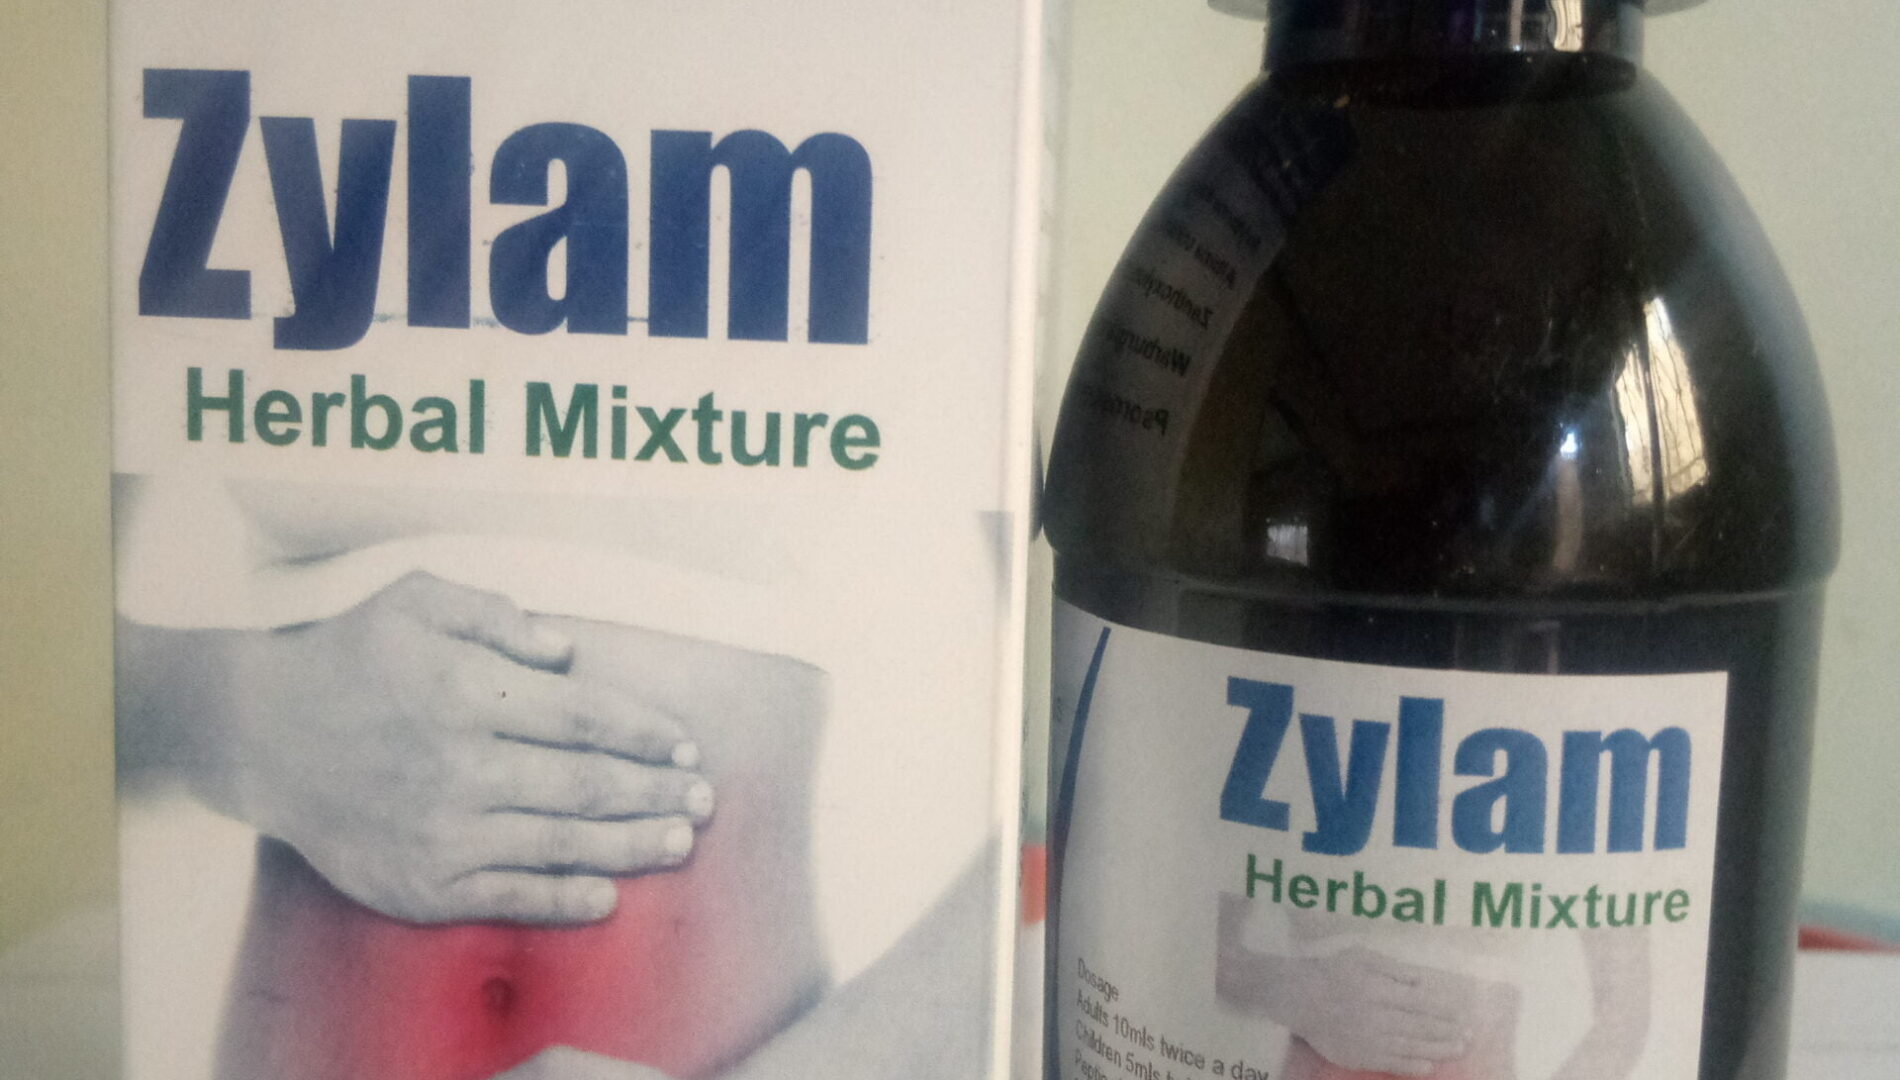 Zylam peptic ulcers herbal mixure